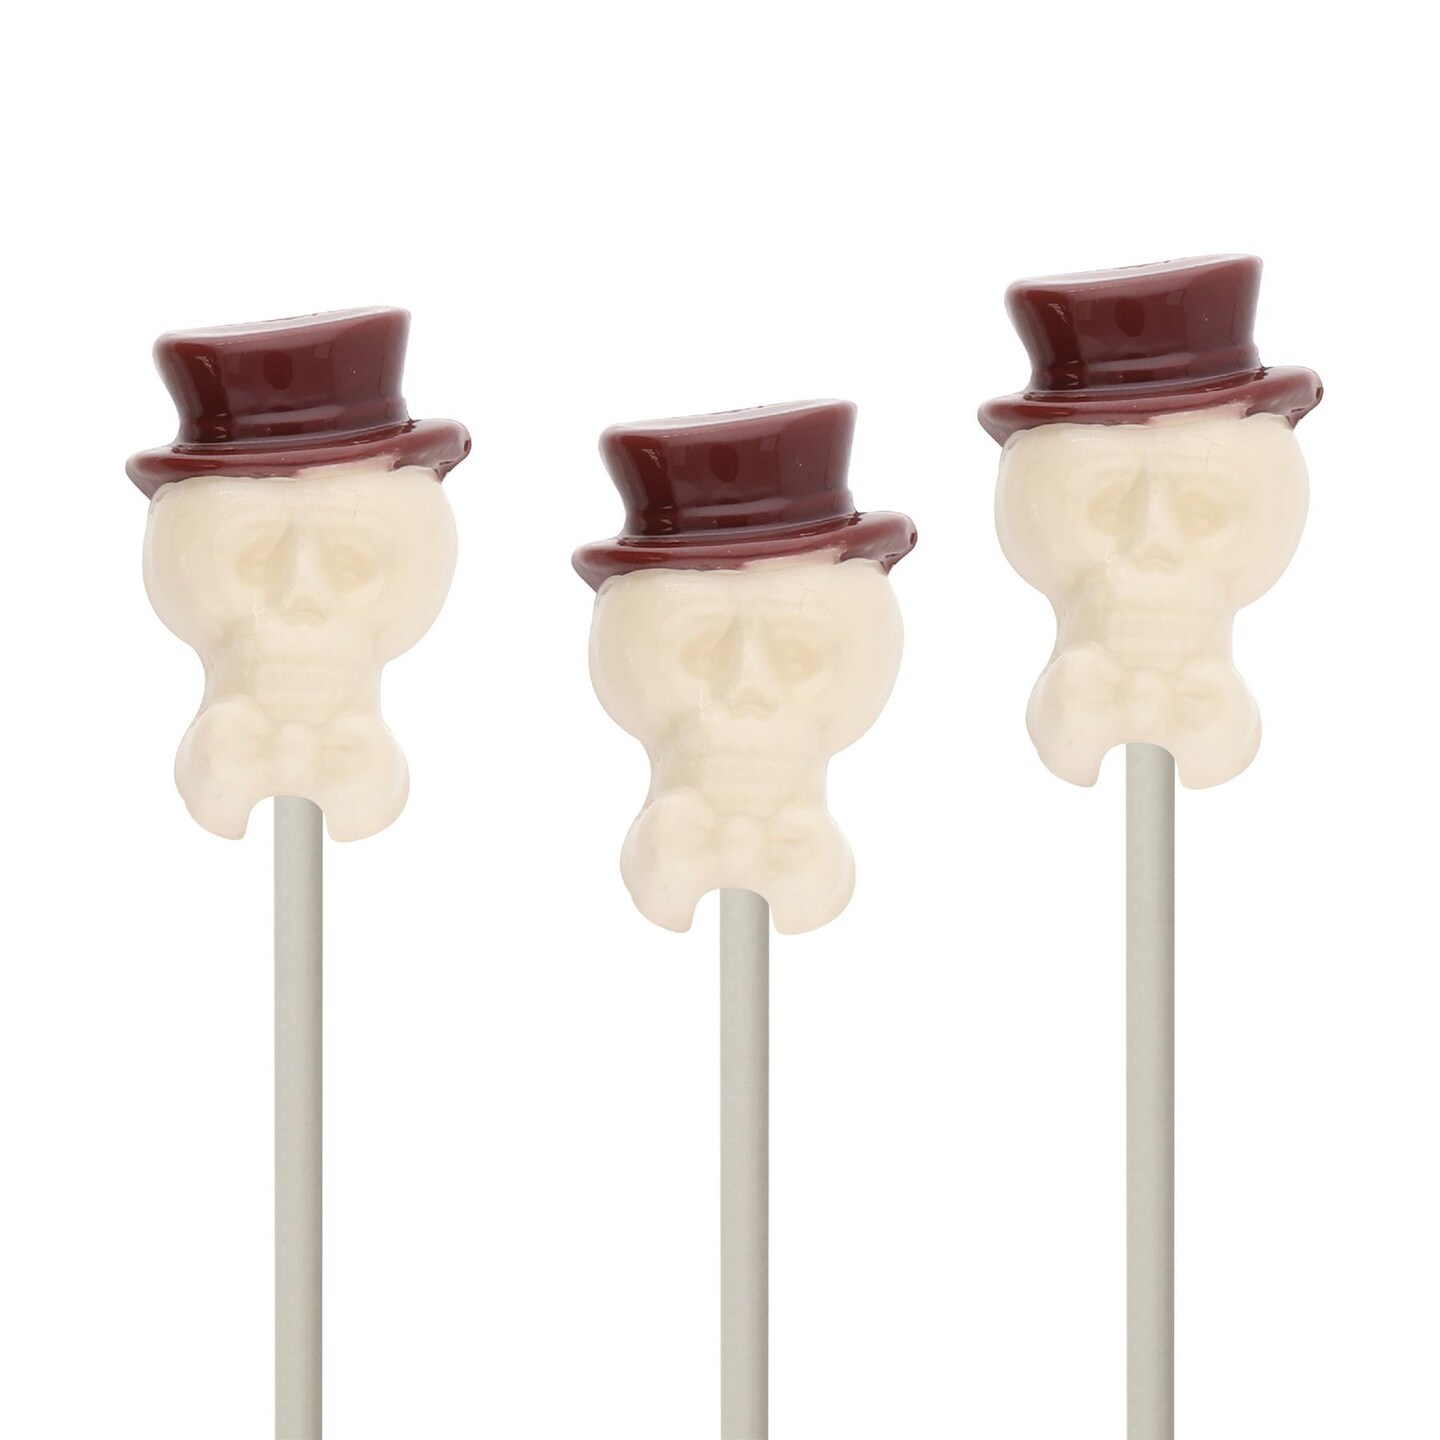 Hard Candy Skull Lollipop Mold & Sticks